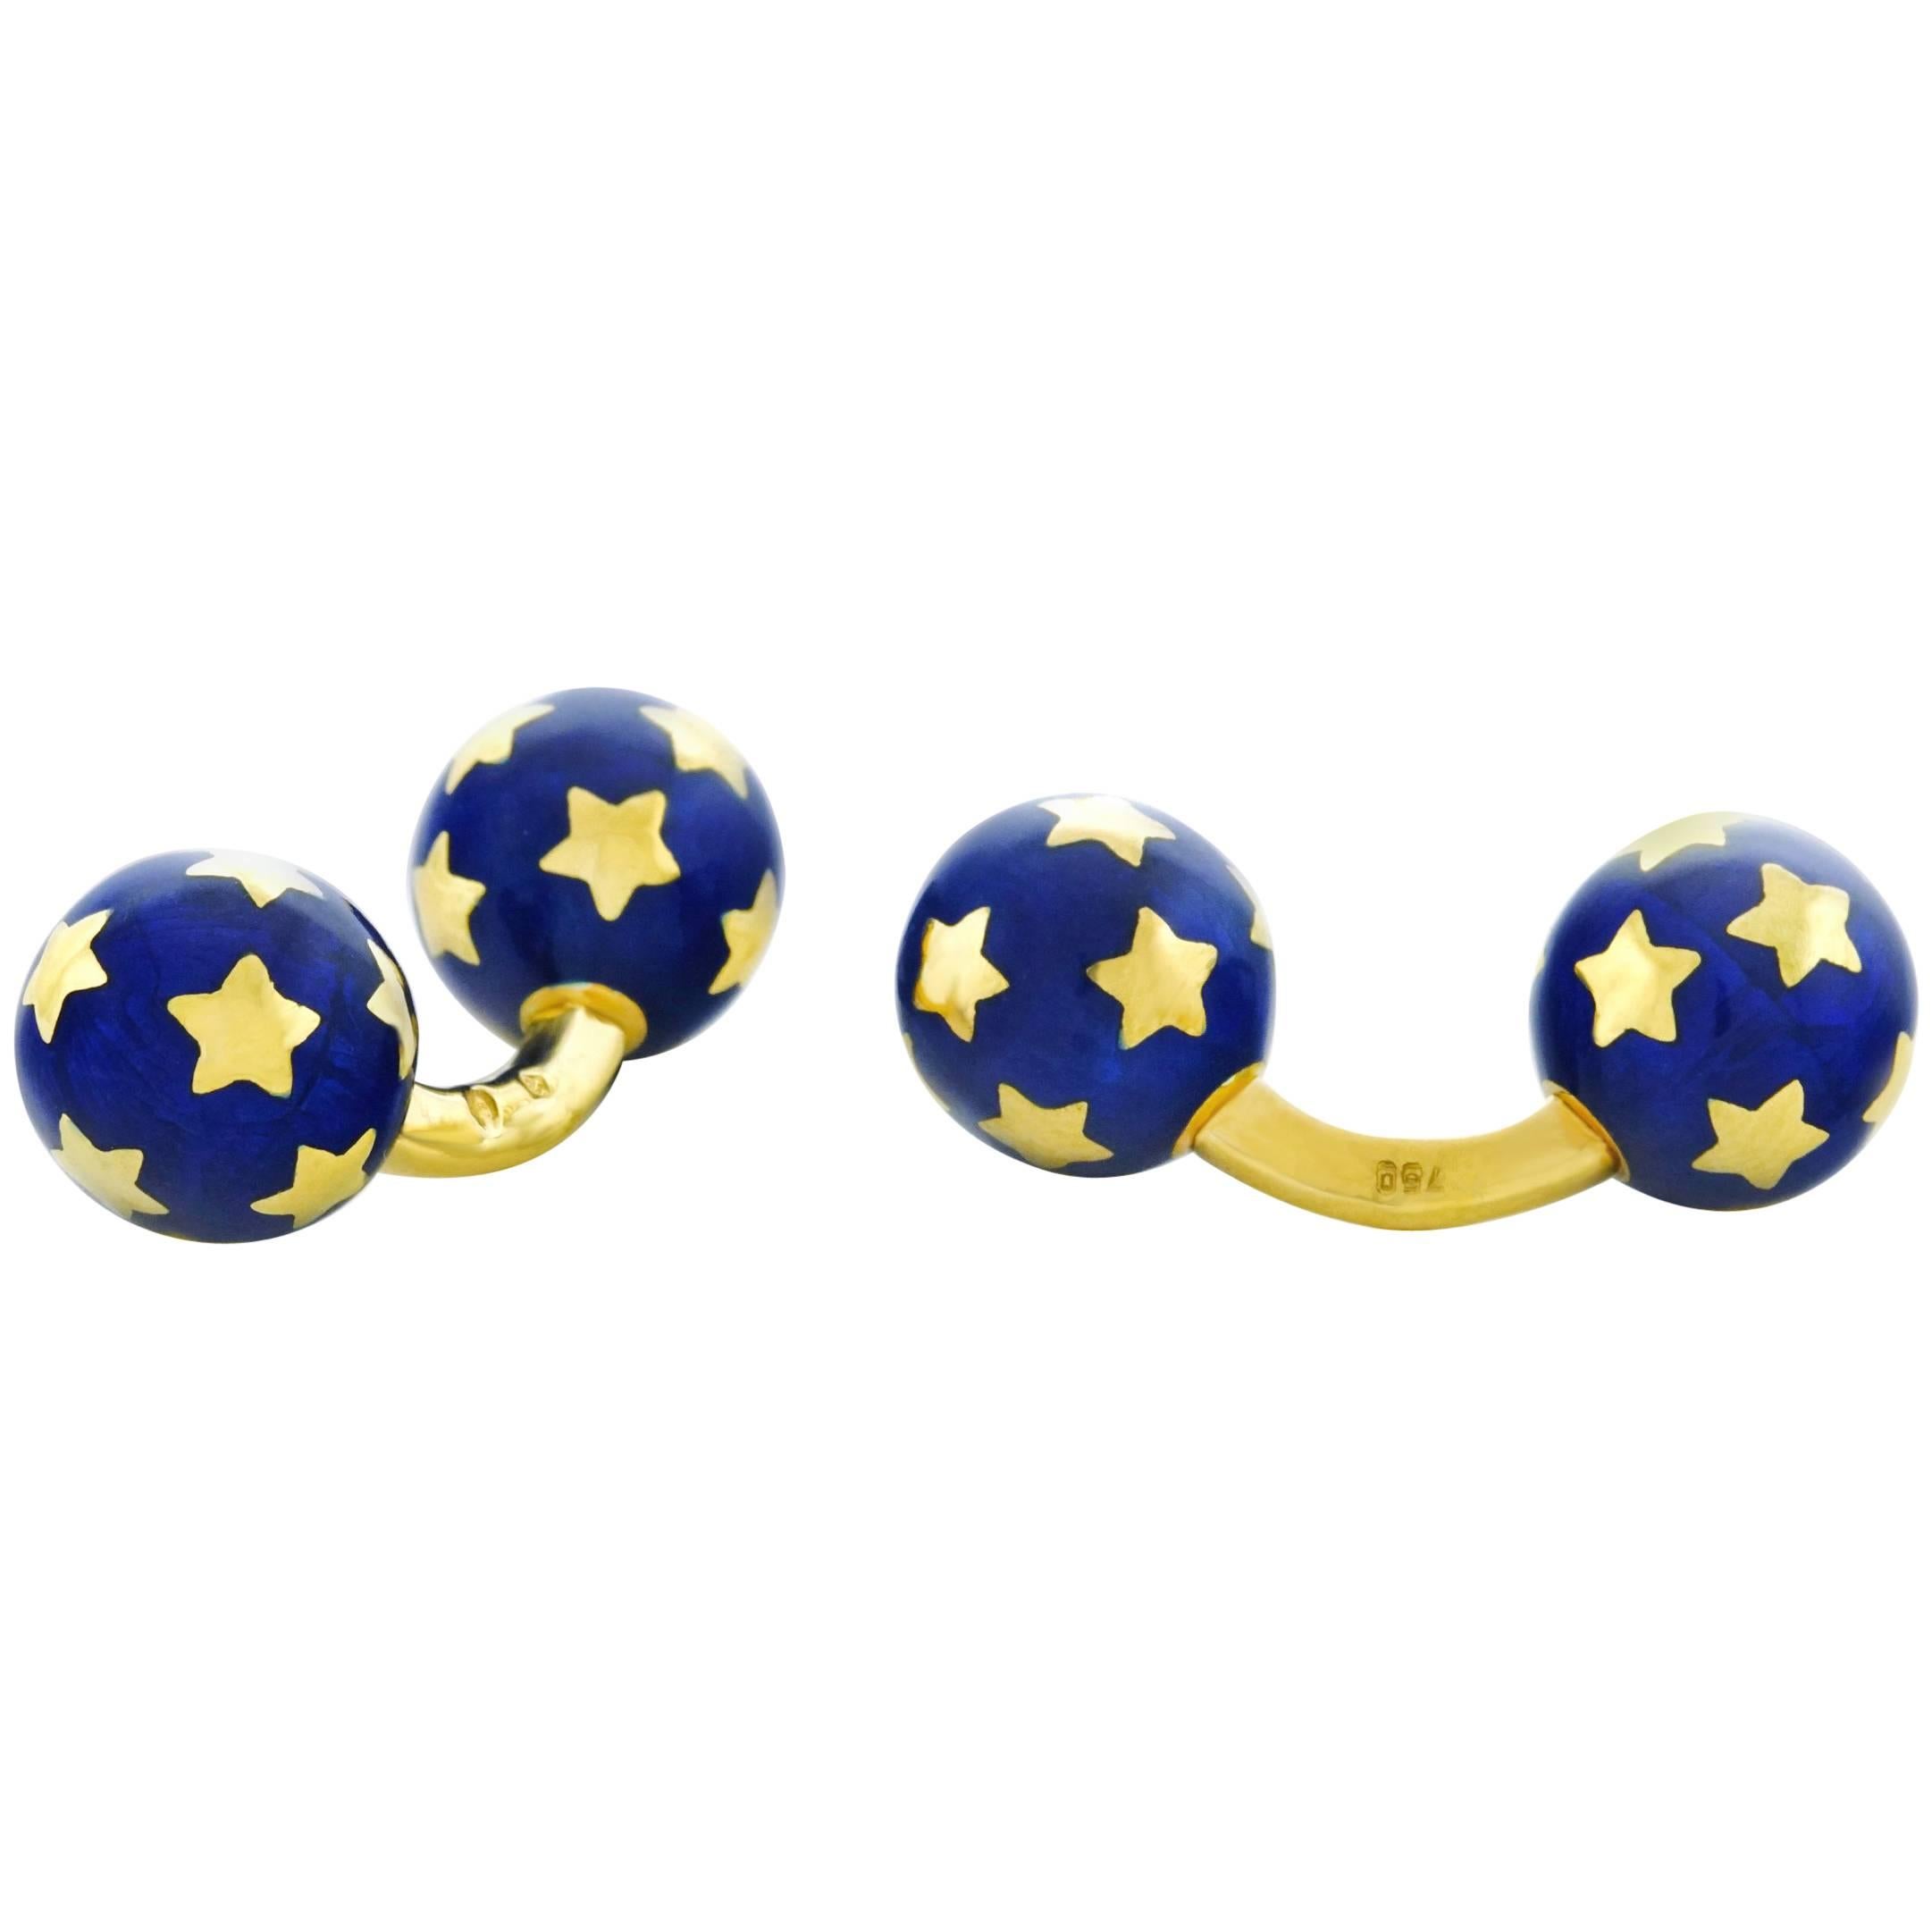 French Enamel and Gold Star Cufflinks